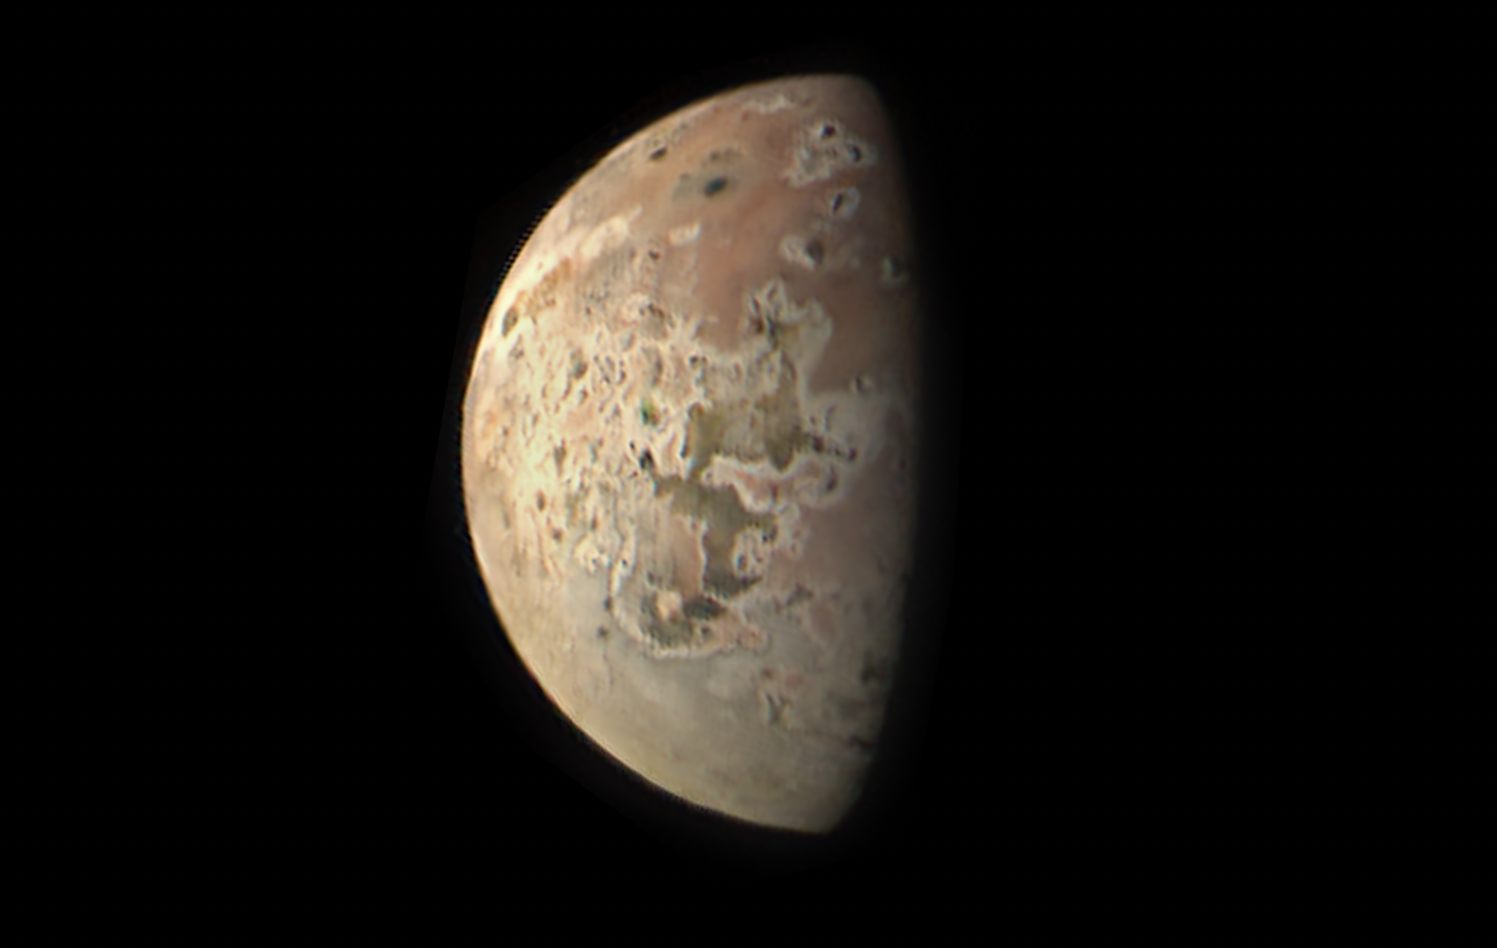 Jupiter's moon Io, as imaged by NASA's Juno spacecraft.